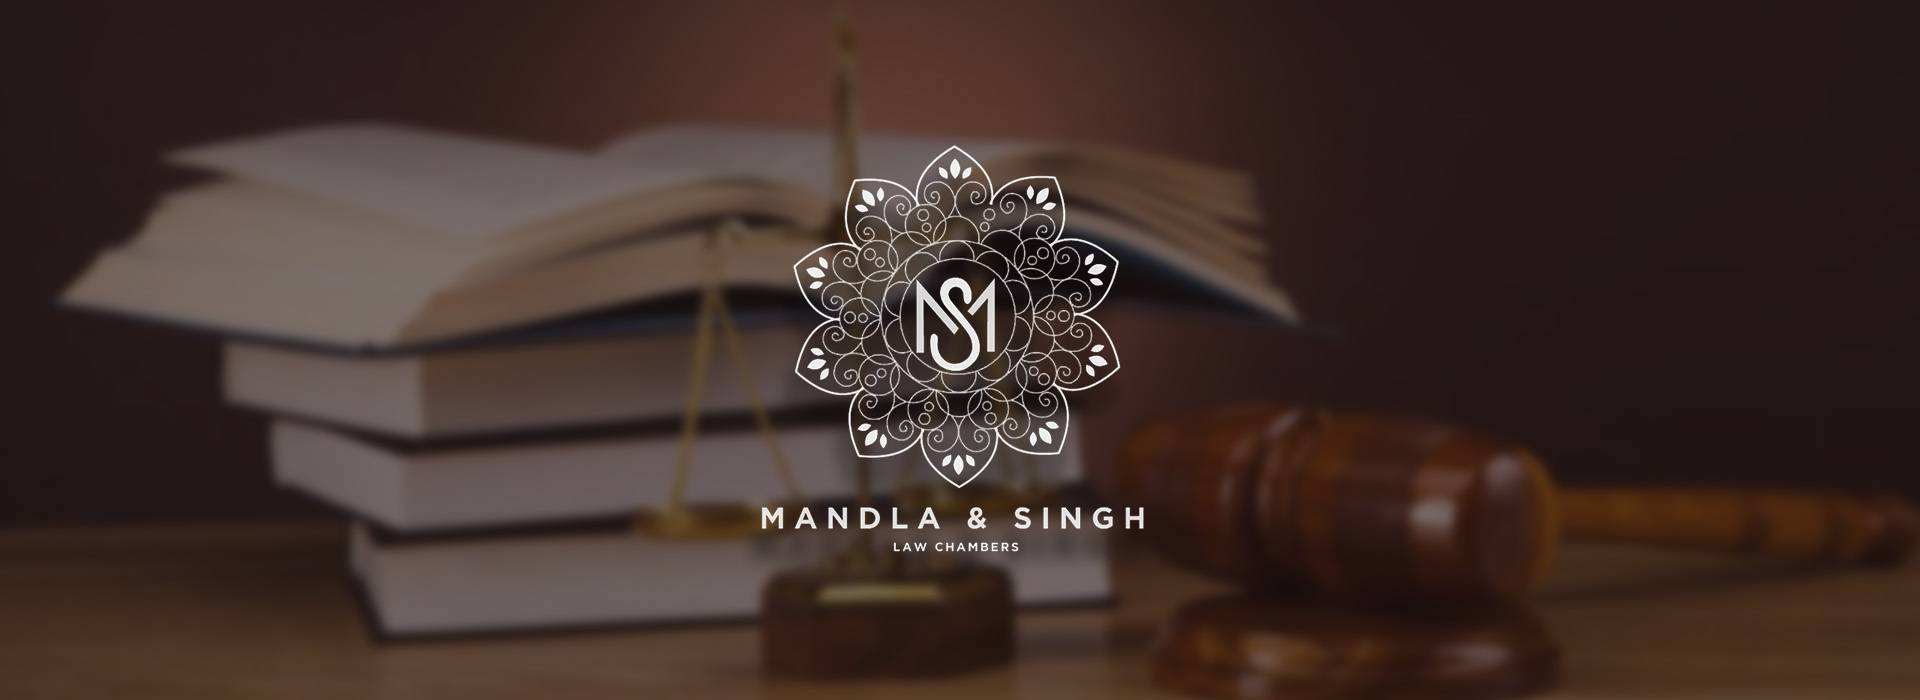 Job Opportunity (Associate) @ Mandla & Singh Law Chambers: Apply Now!